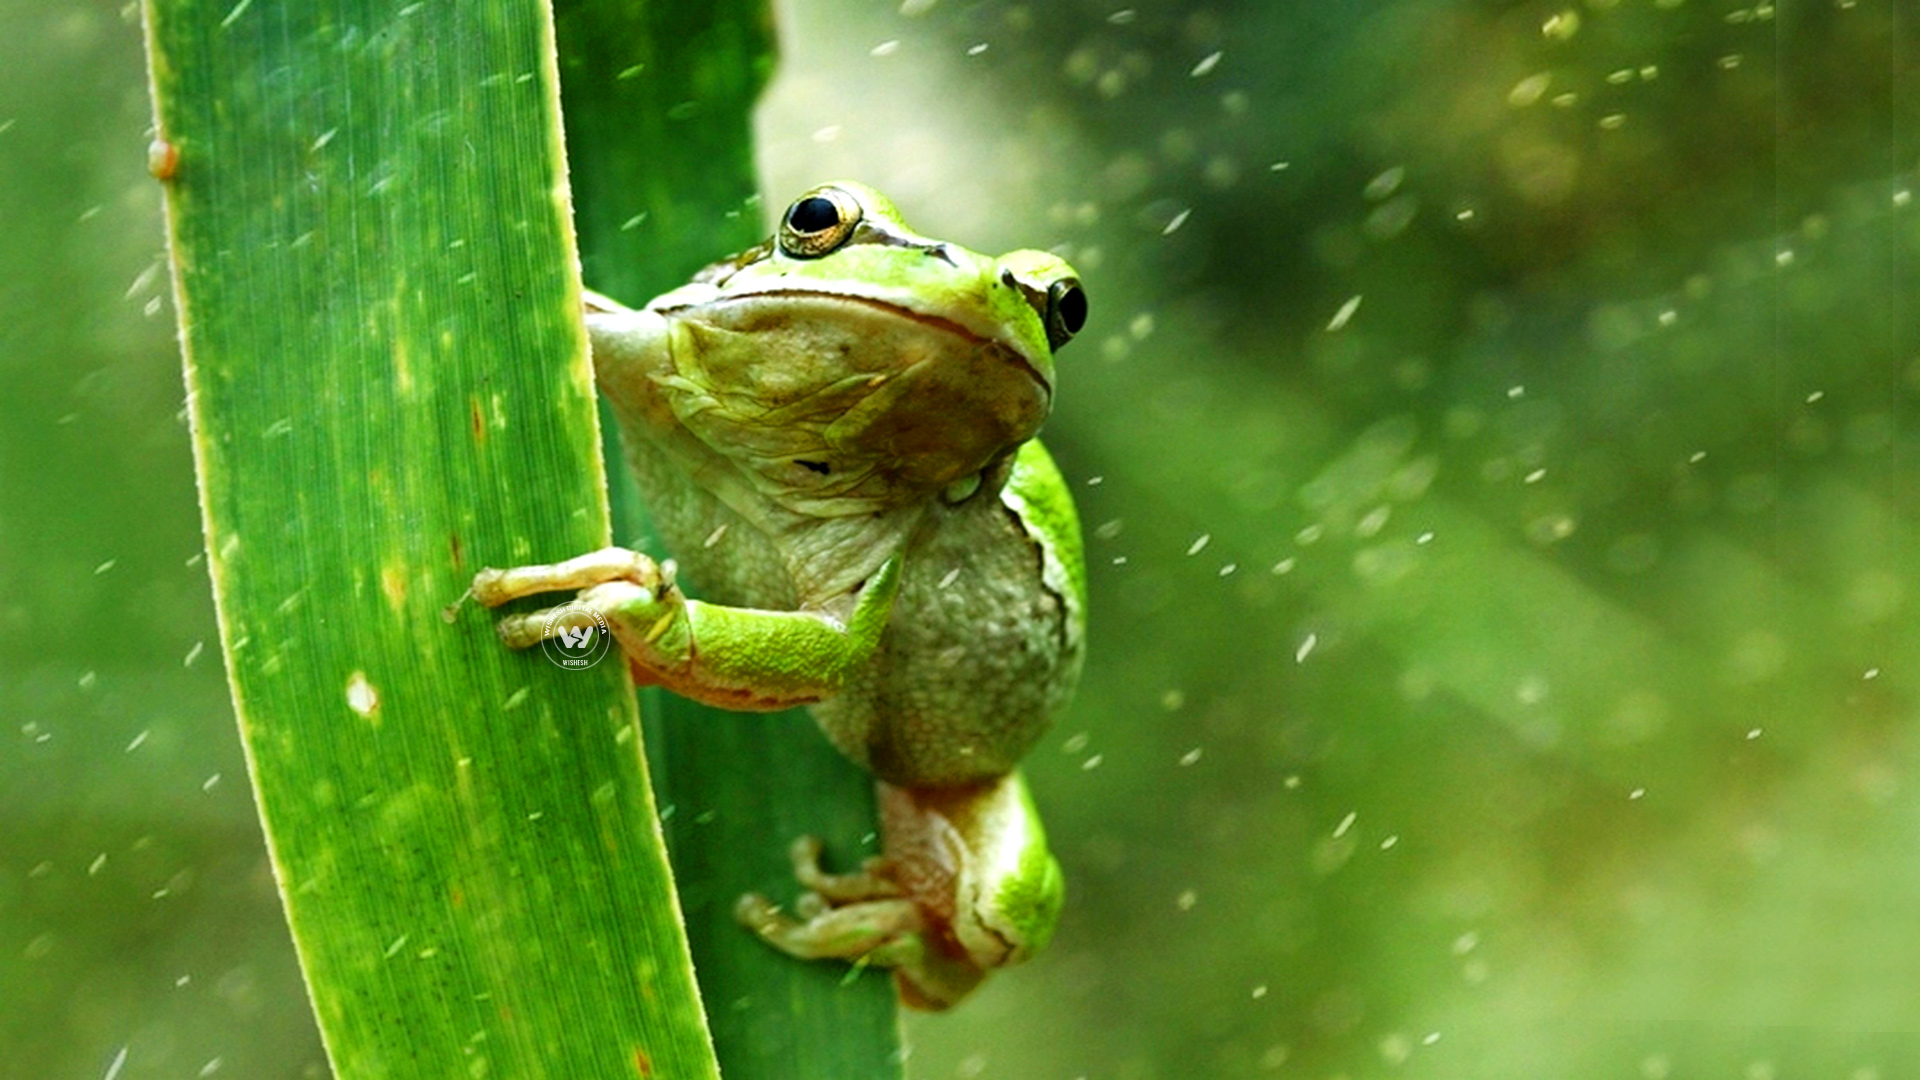 Wallpaper 2of 5 | frog | Frog in the rain | Frog in the rain